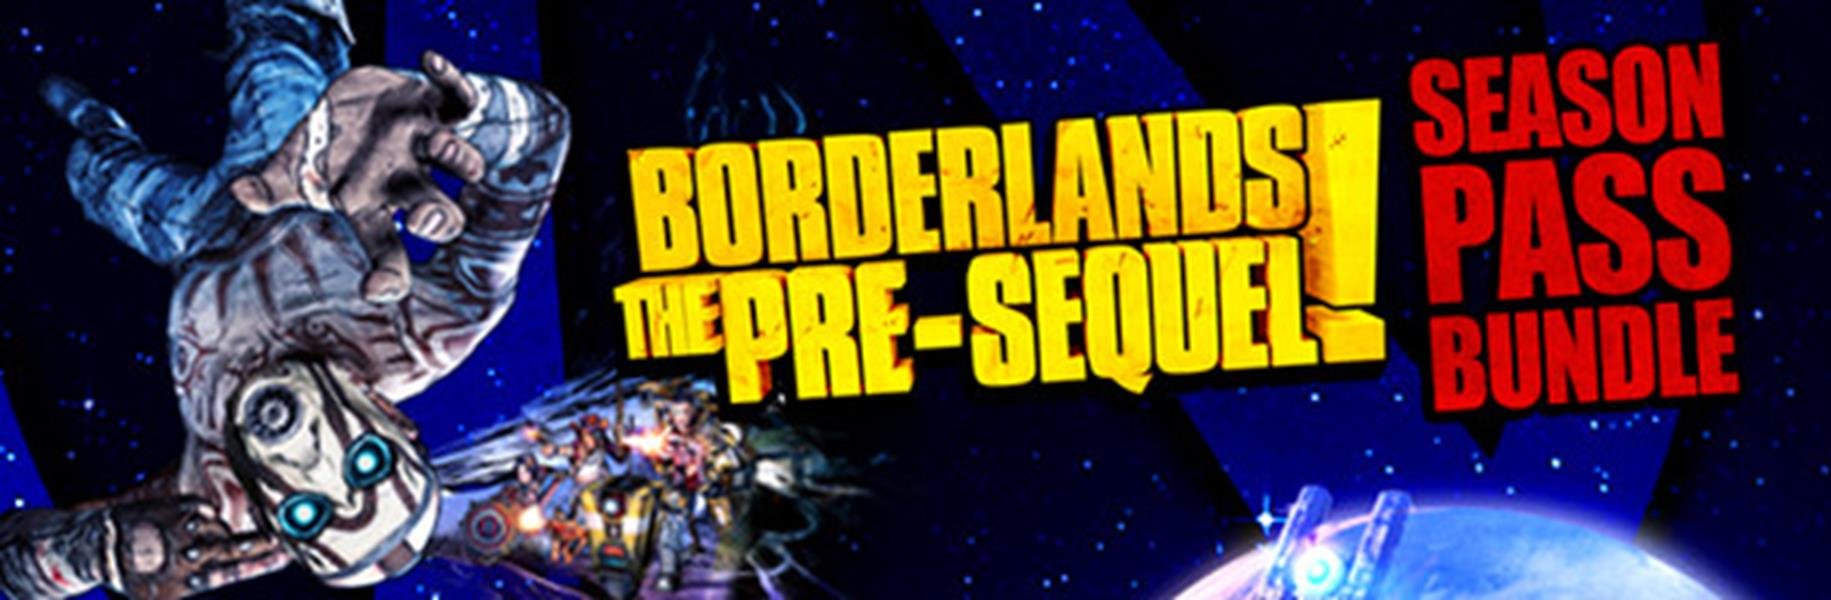 Borderlands: The Pre-Sequel Season Pass (Mac - Linux) cover